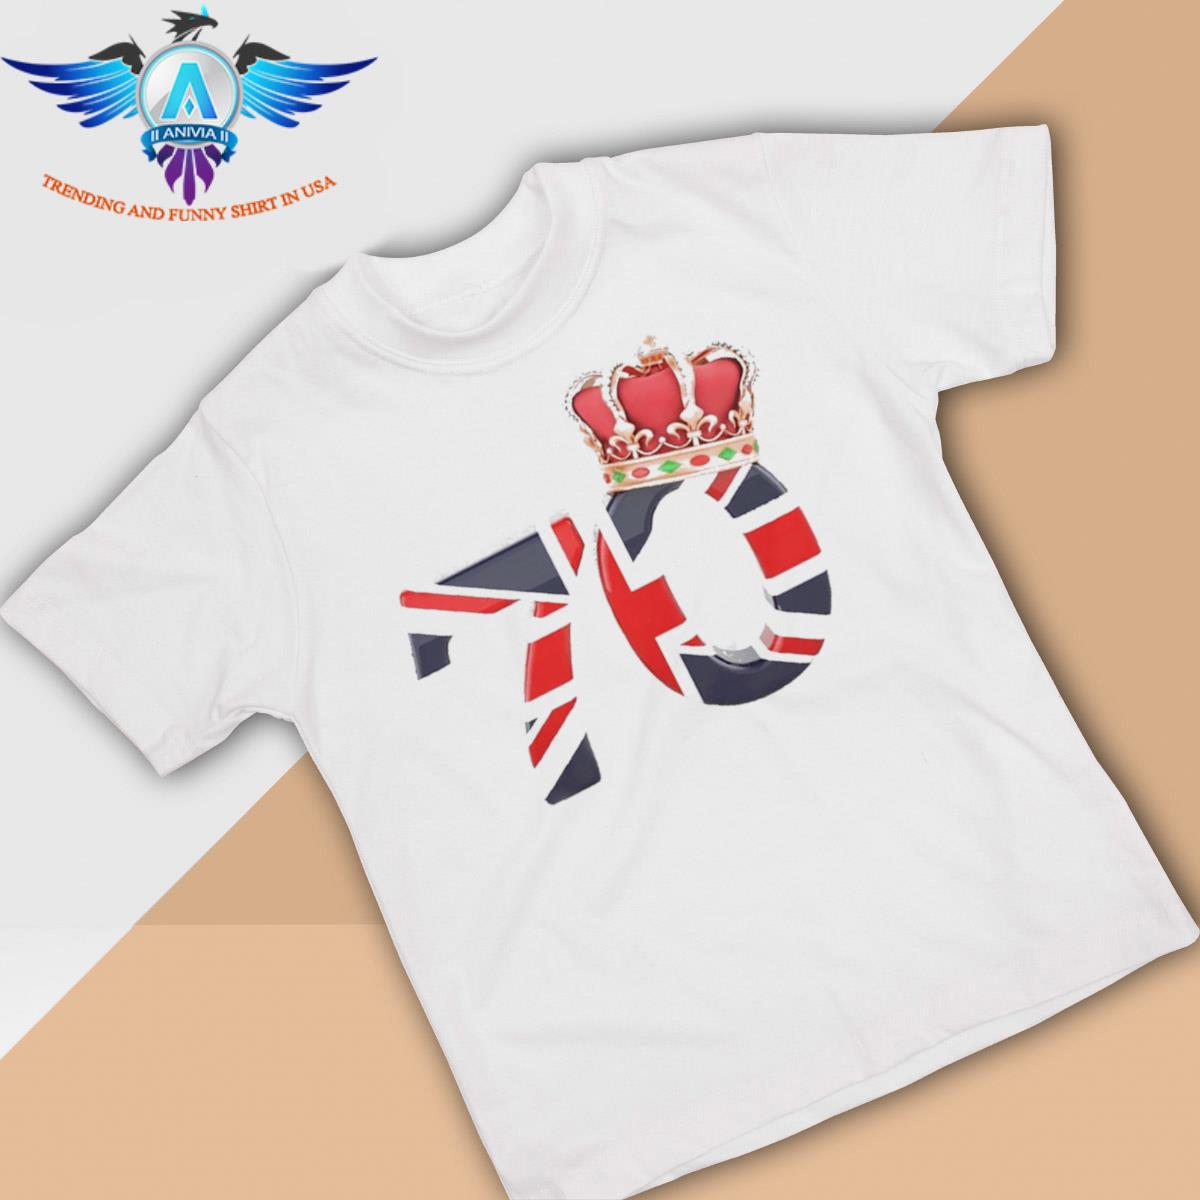 Queen Elizabeth II Platinum Jubilee 2022 Celebration Royal Crown The Queen’s shirt